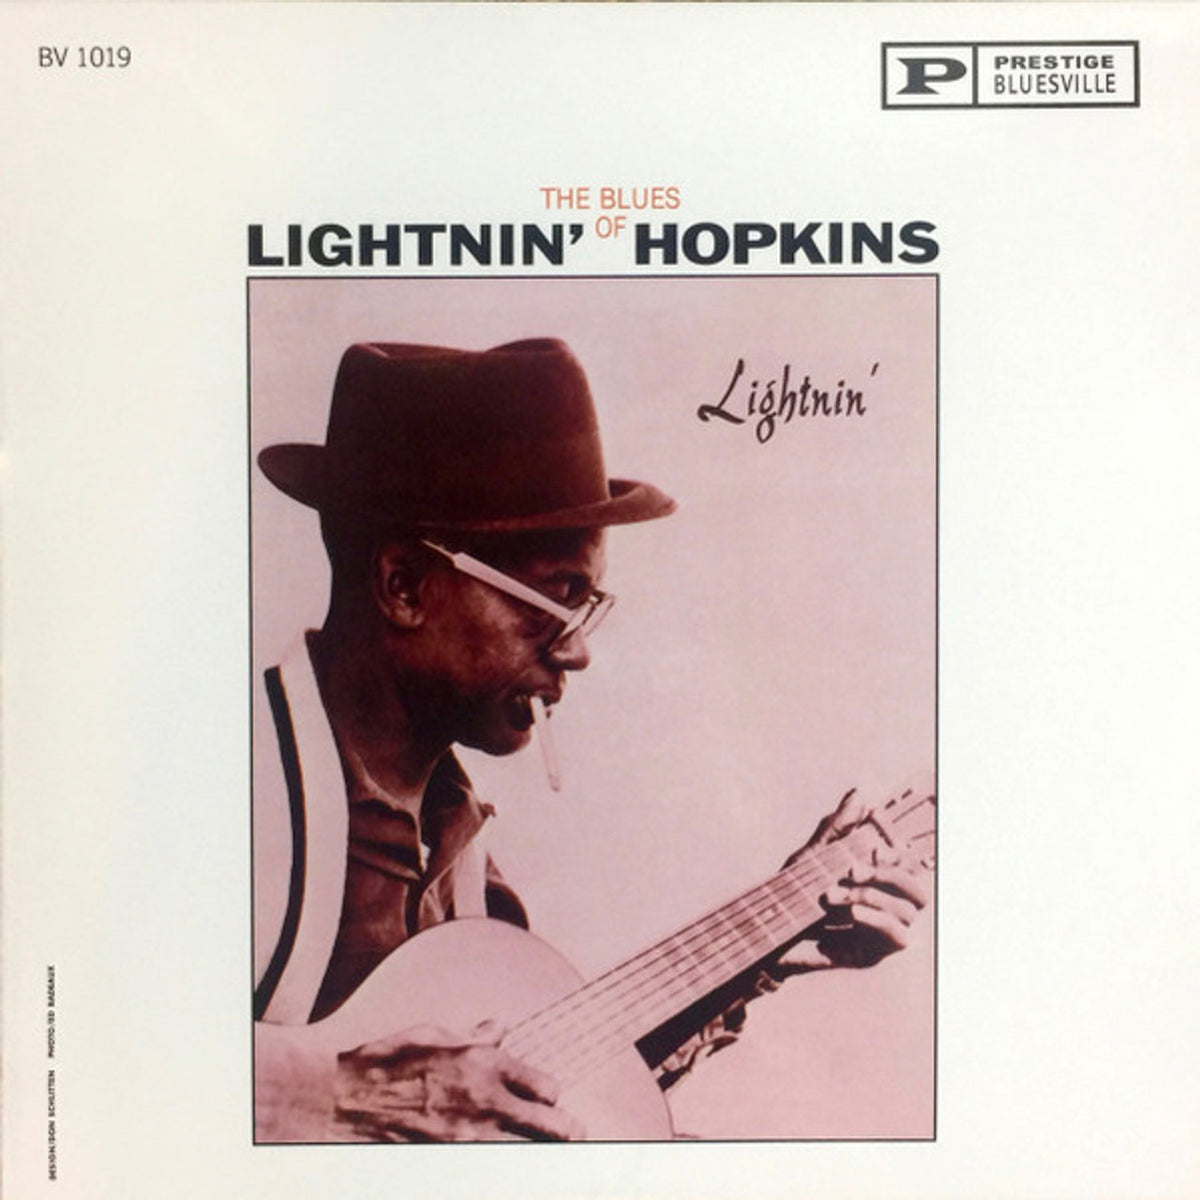 Lightnin' Hopkins - Lightnin' LP (200g Analogue Productions)